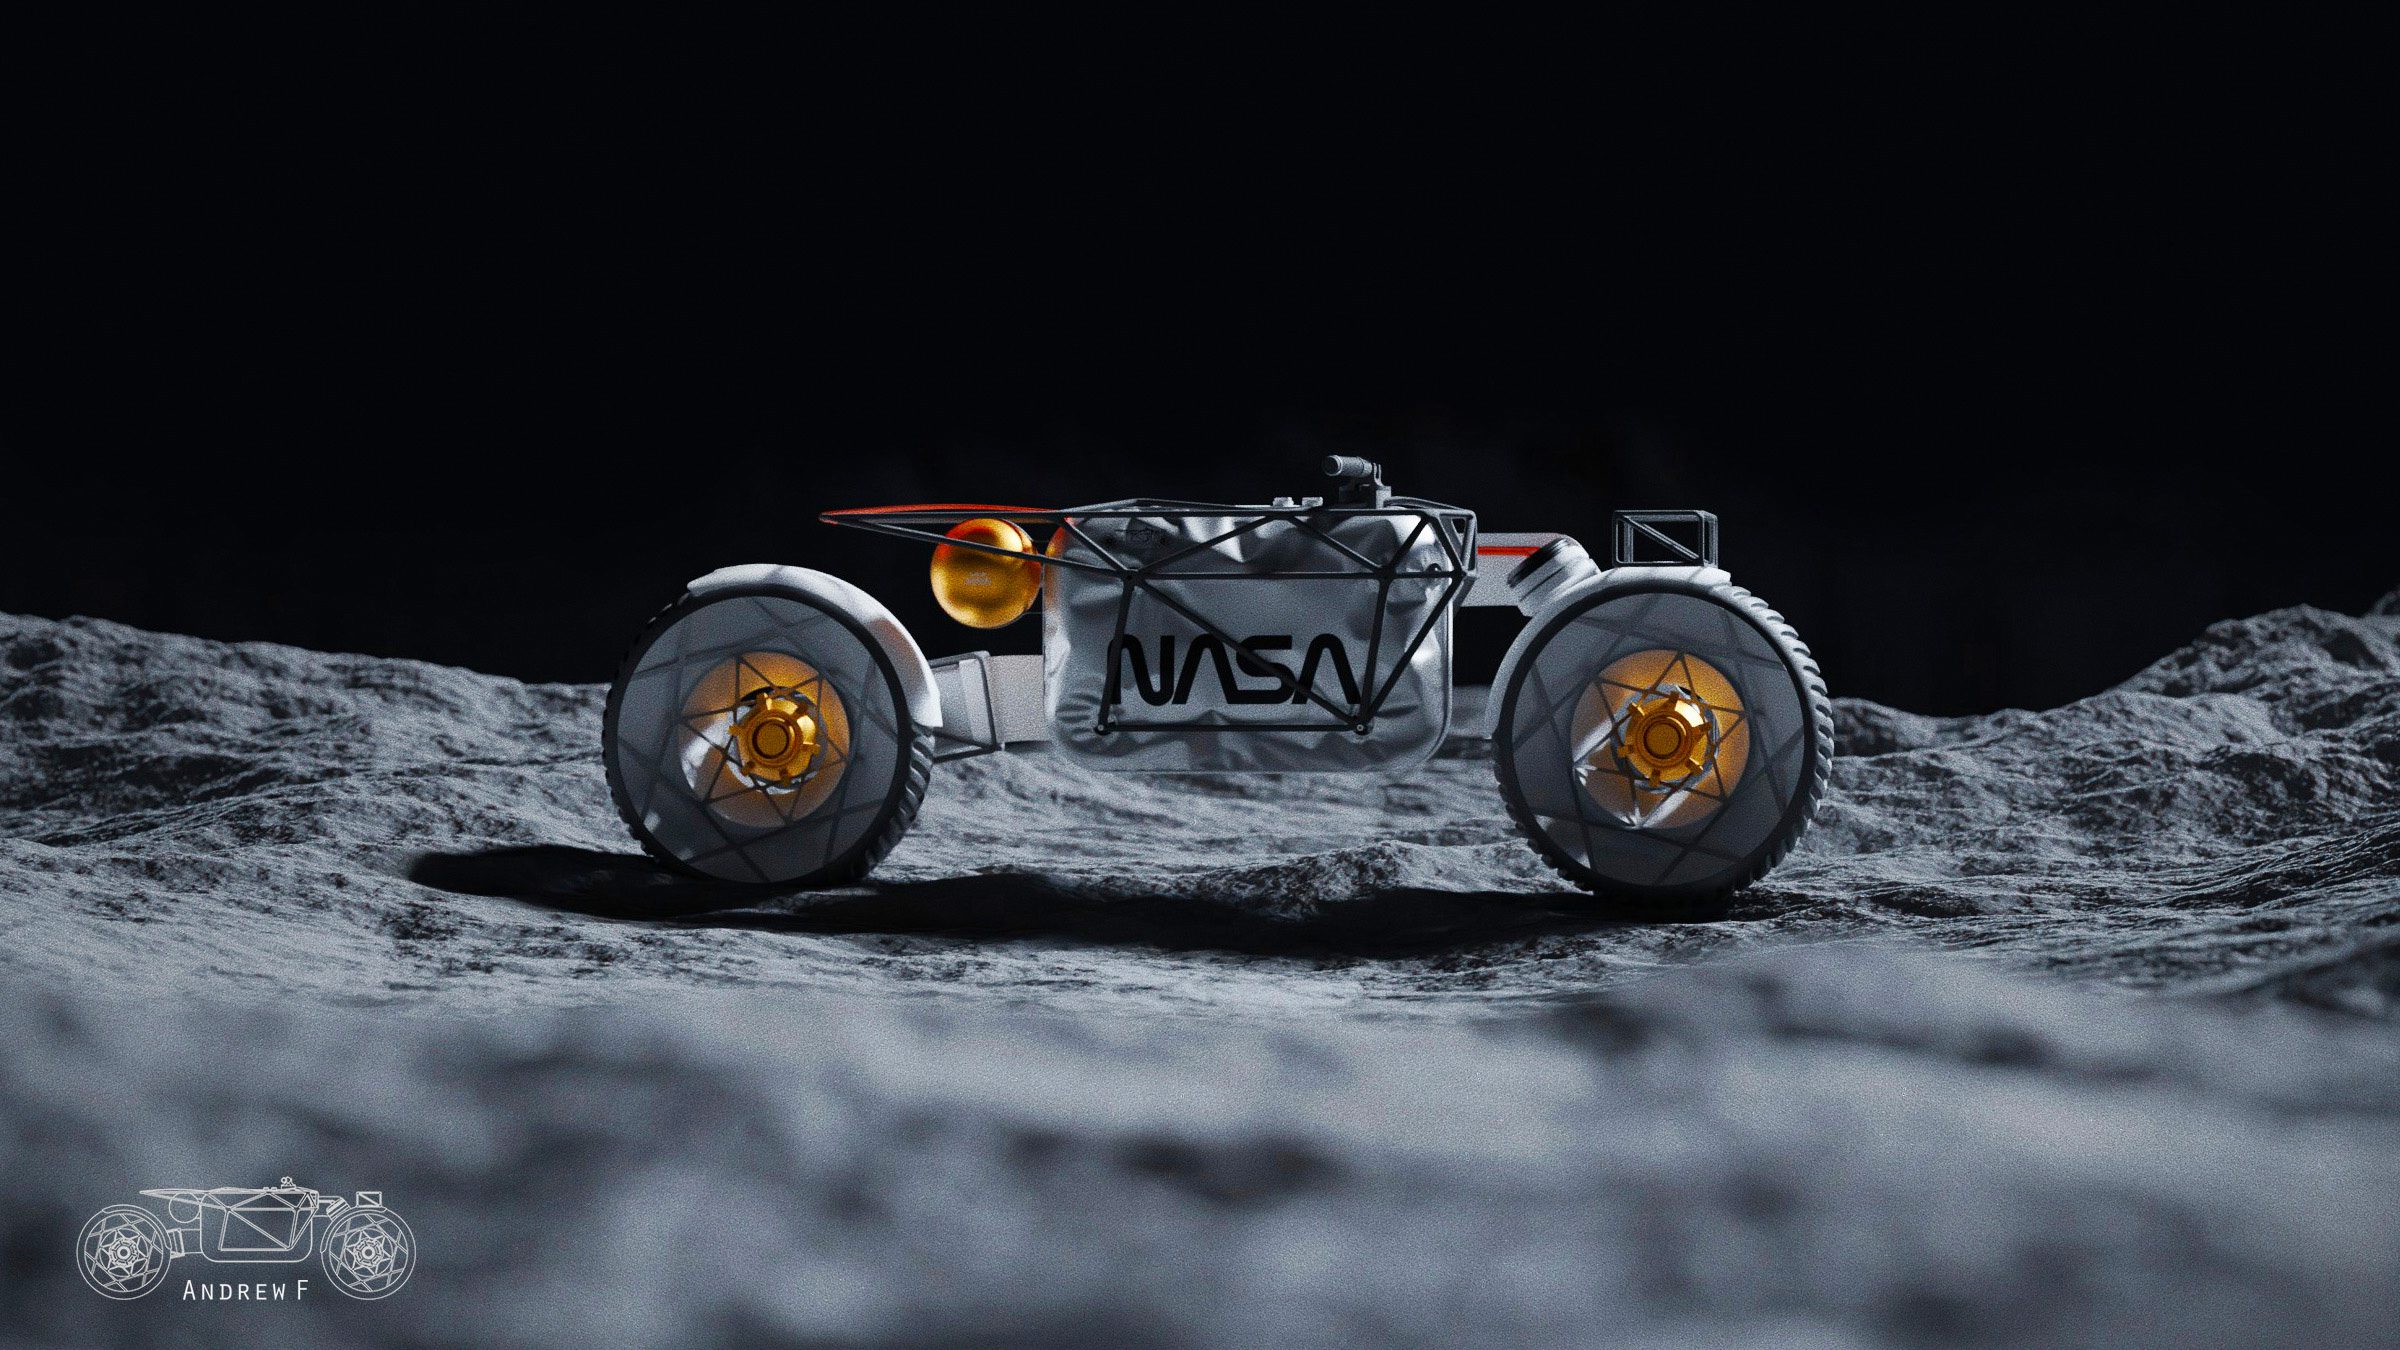 Hookie Company's Tardigrade Moon Motorcycle on the moon's surface